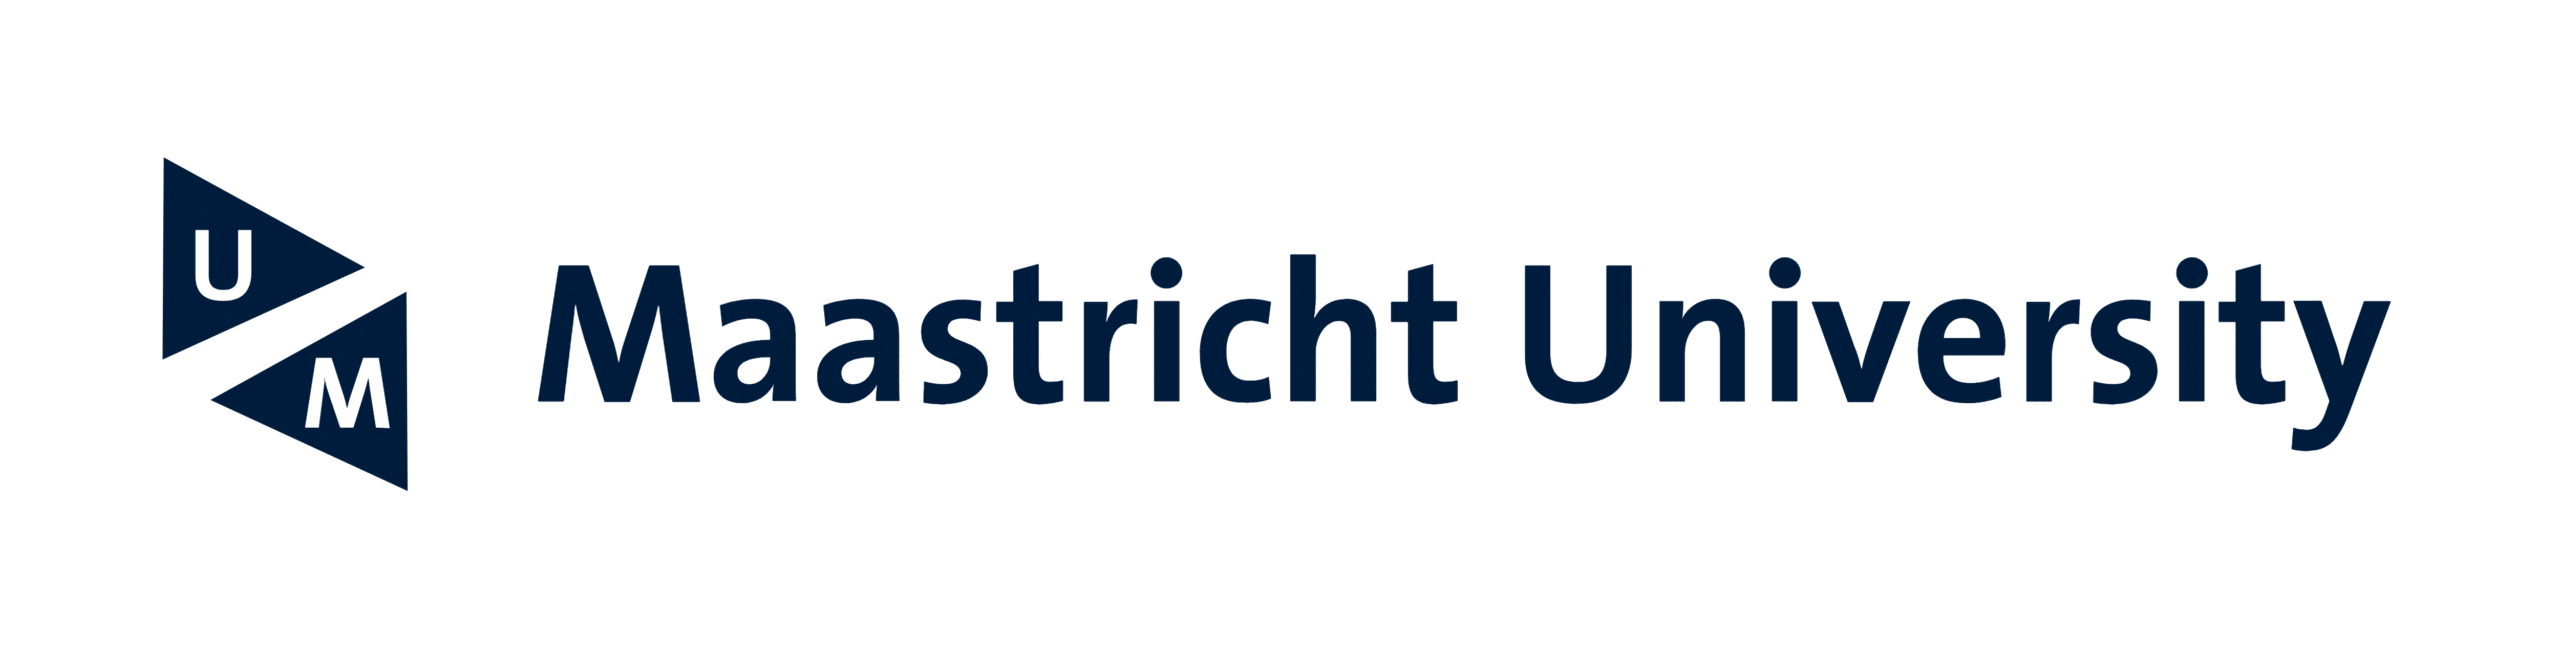 Maastricht_University_logo